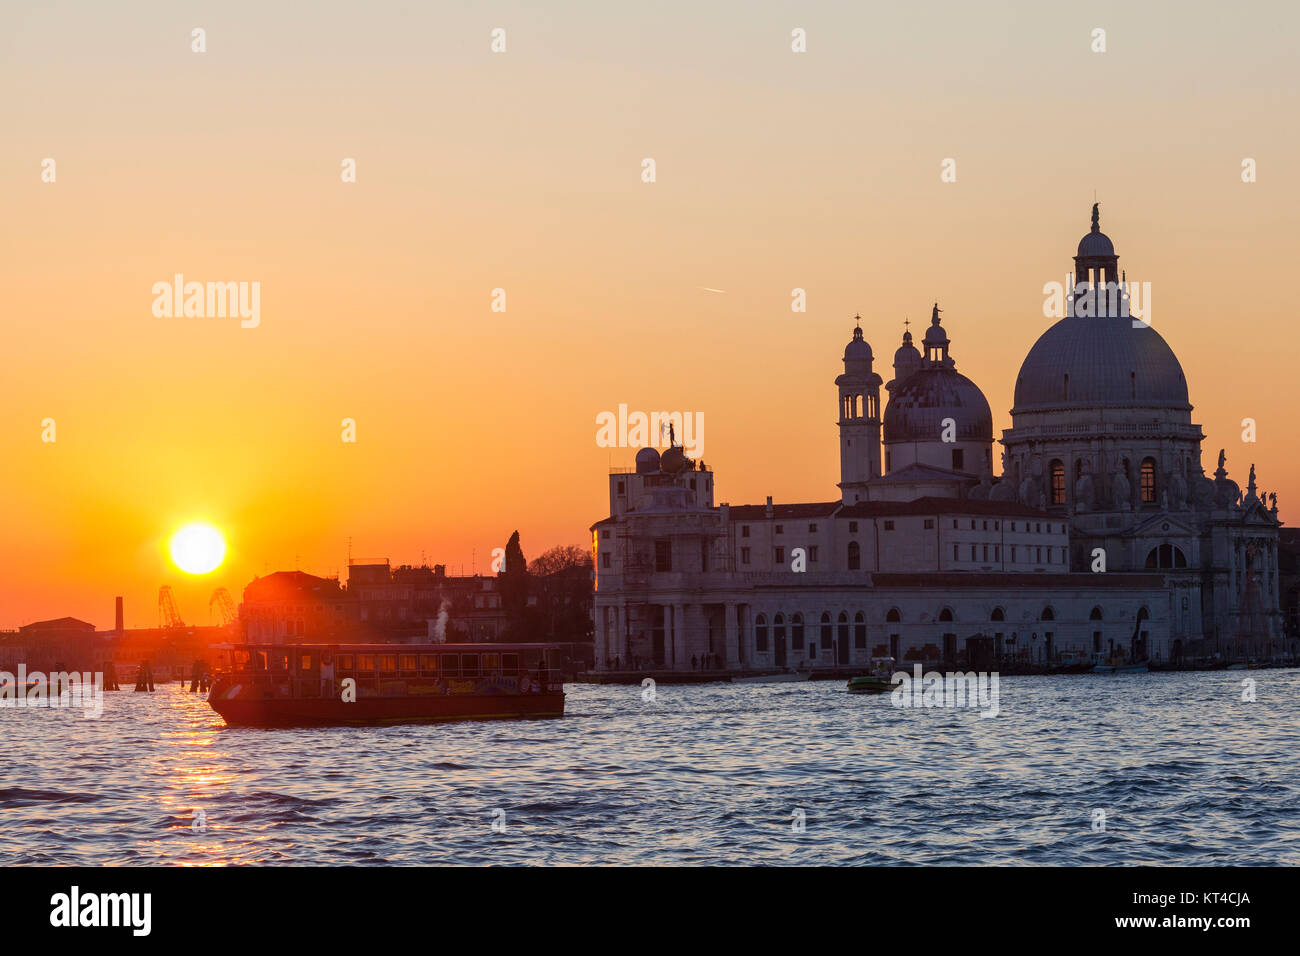 Vivid orange sunset over Basilica di Santa Maria della Salute with a vaporetto passing by on the Grand Canal, Venice, Italy Stock Photo